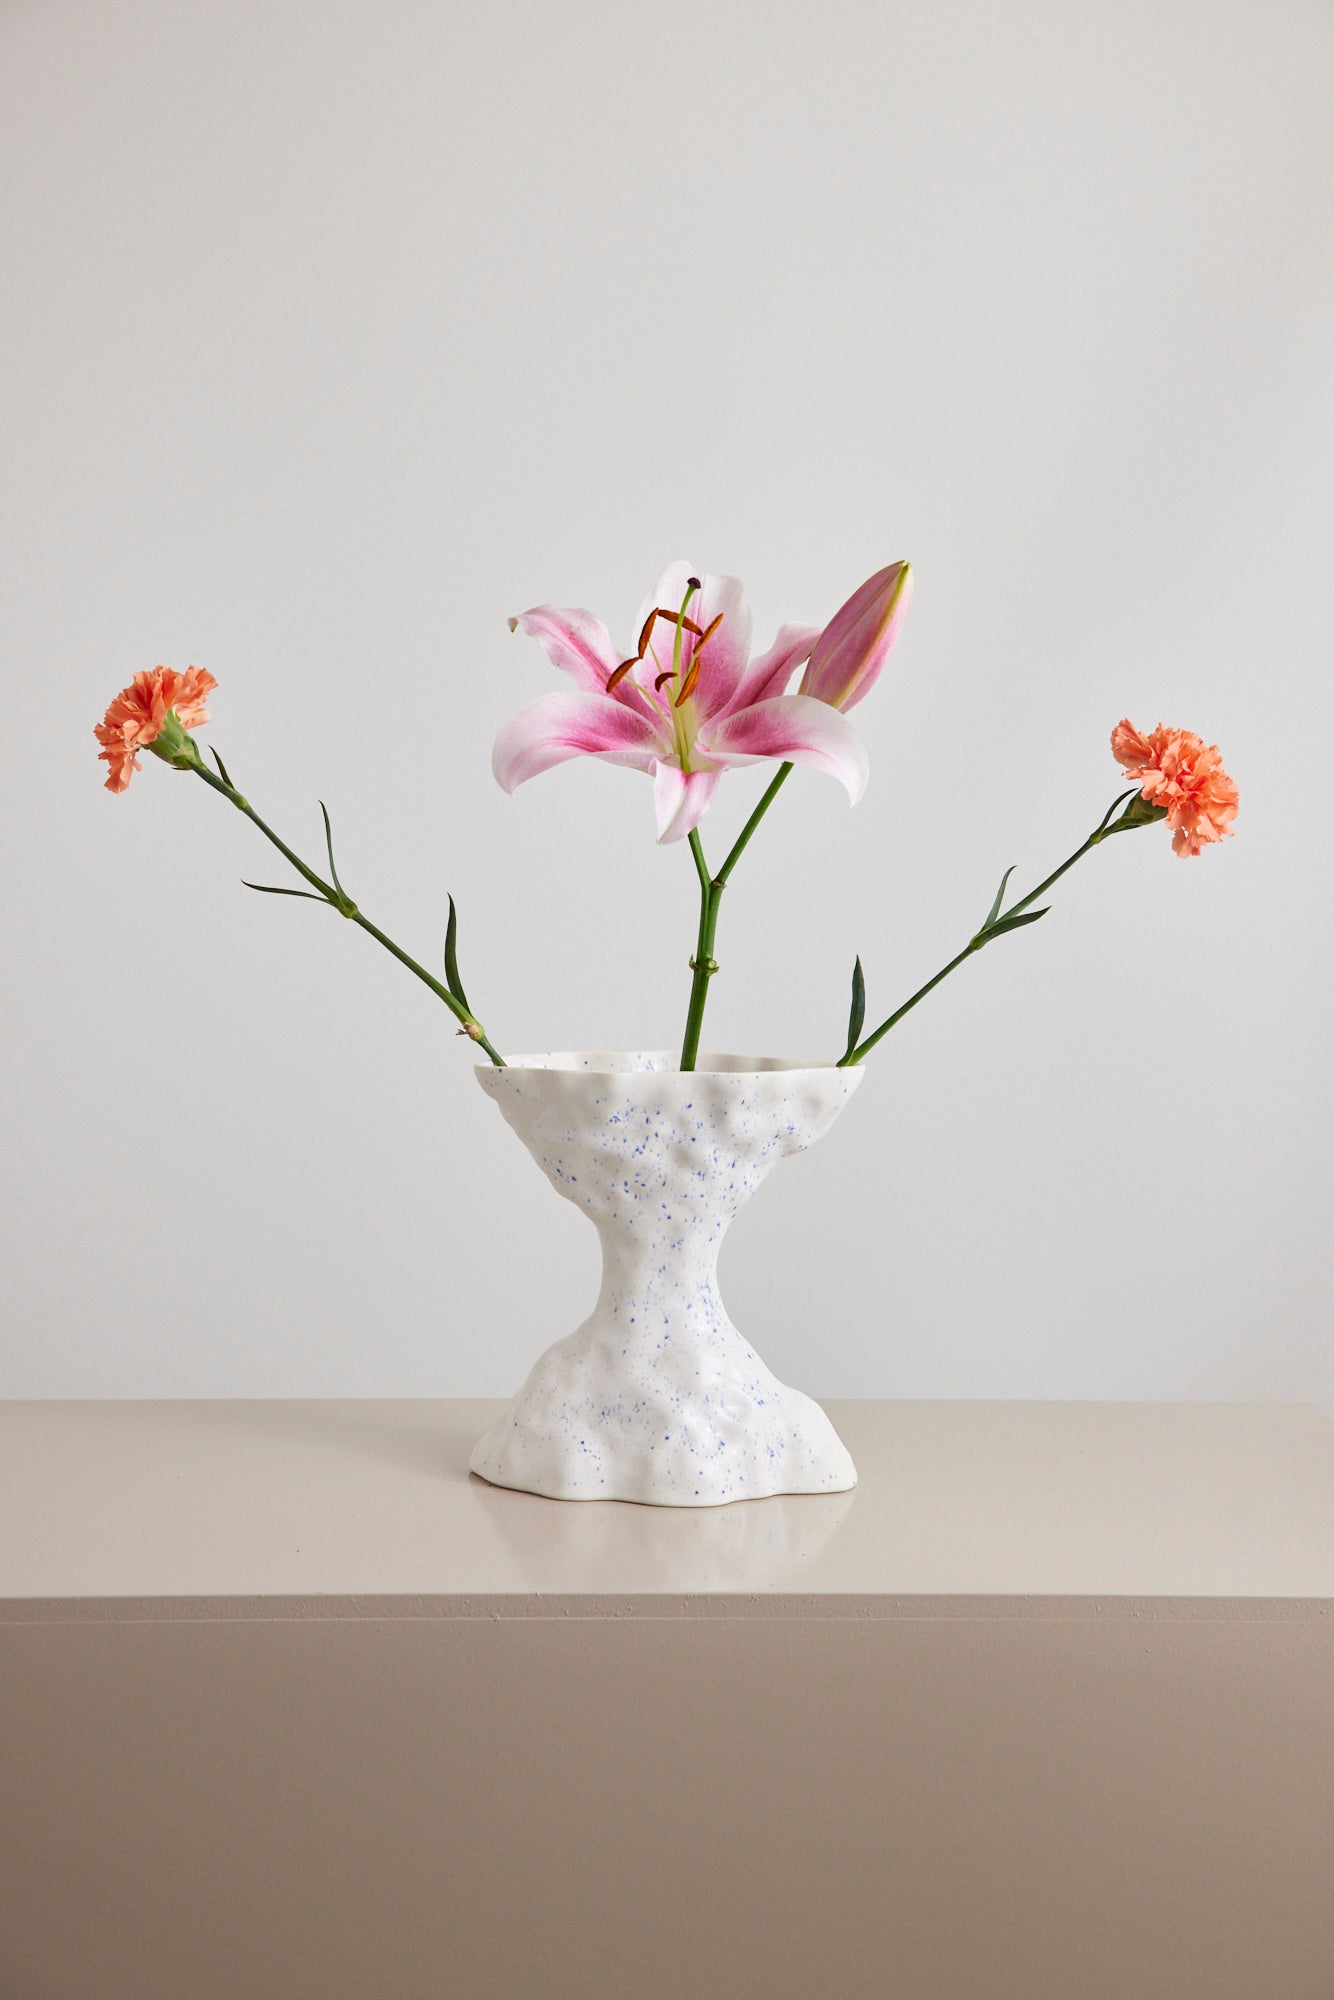 Thora Finnsdottir - Mirroring Mountain Vase